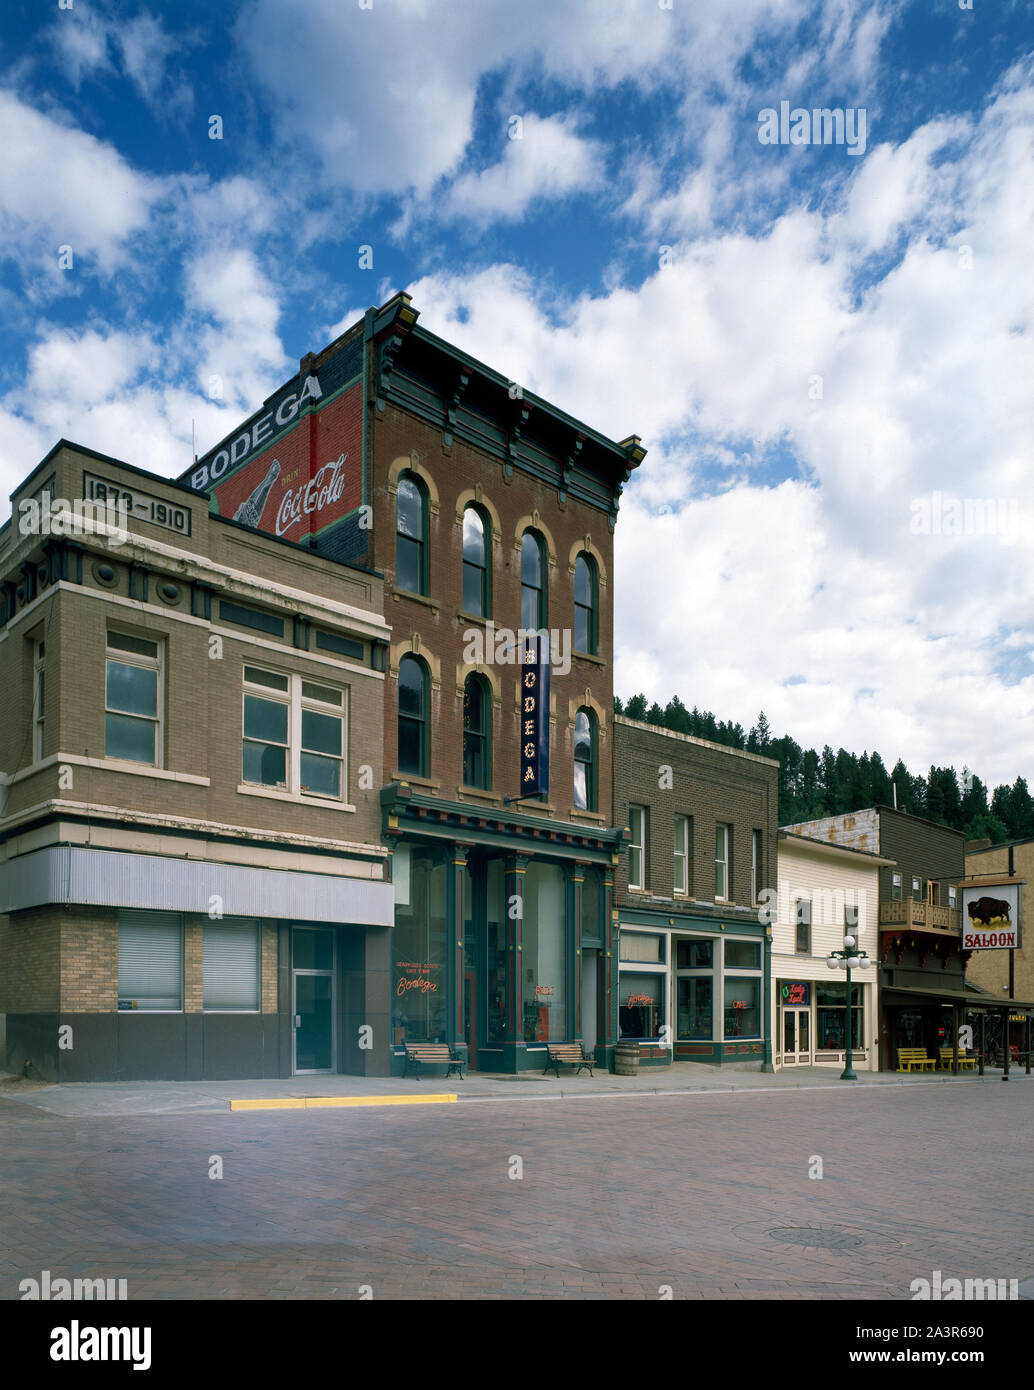 Street scene in Deadwood, South Dakota, a town that underwent extensive rehabilitation using money raised from casino proceeds Stock Photo